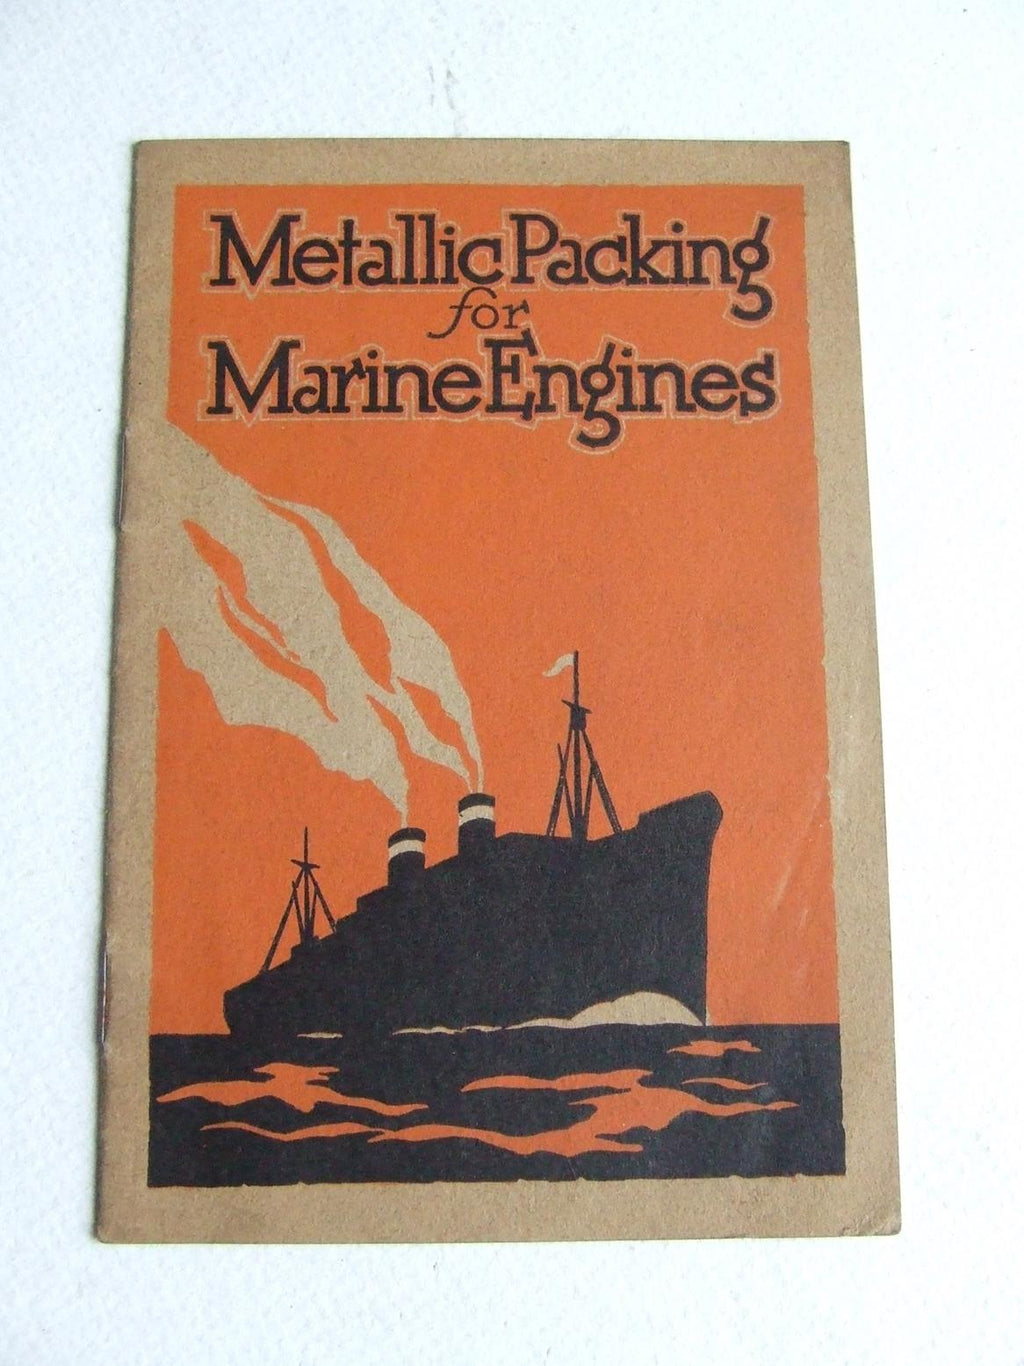 Metallic Packing for Marine Engines